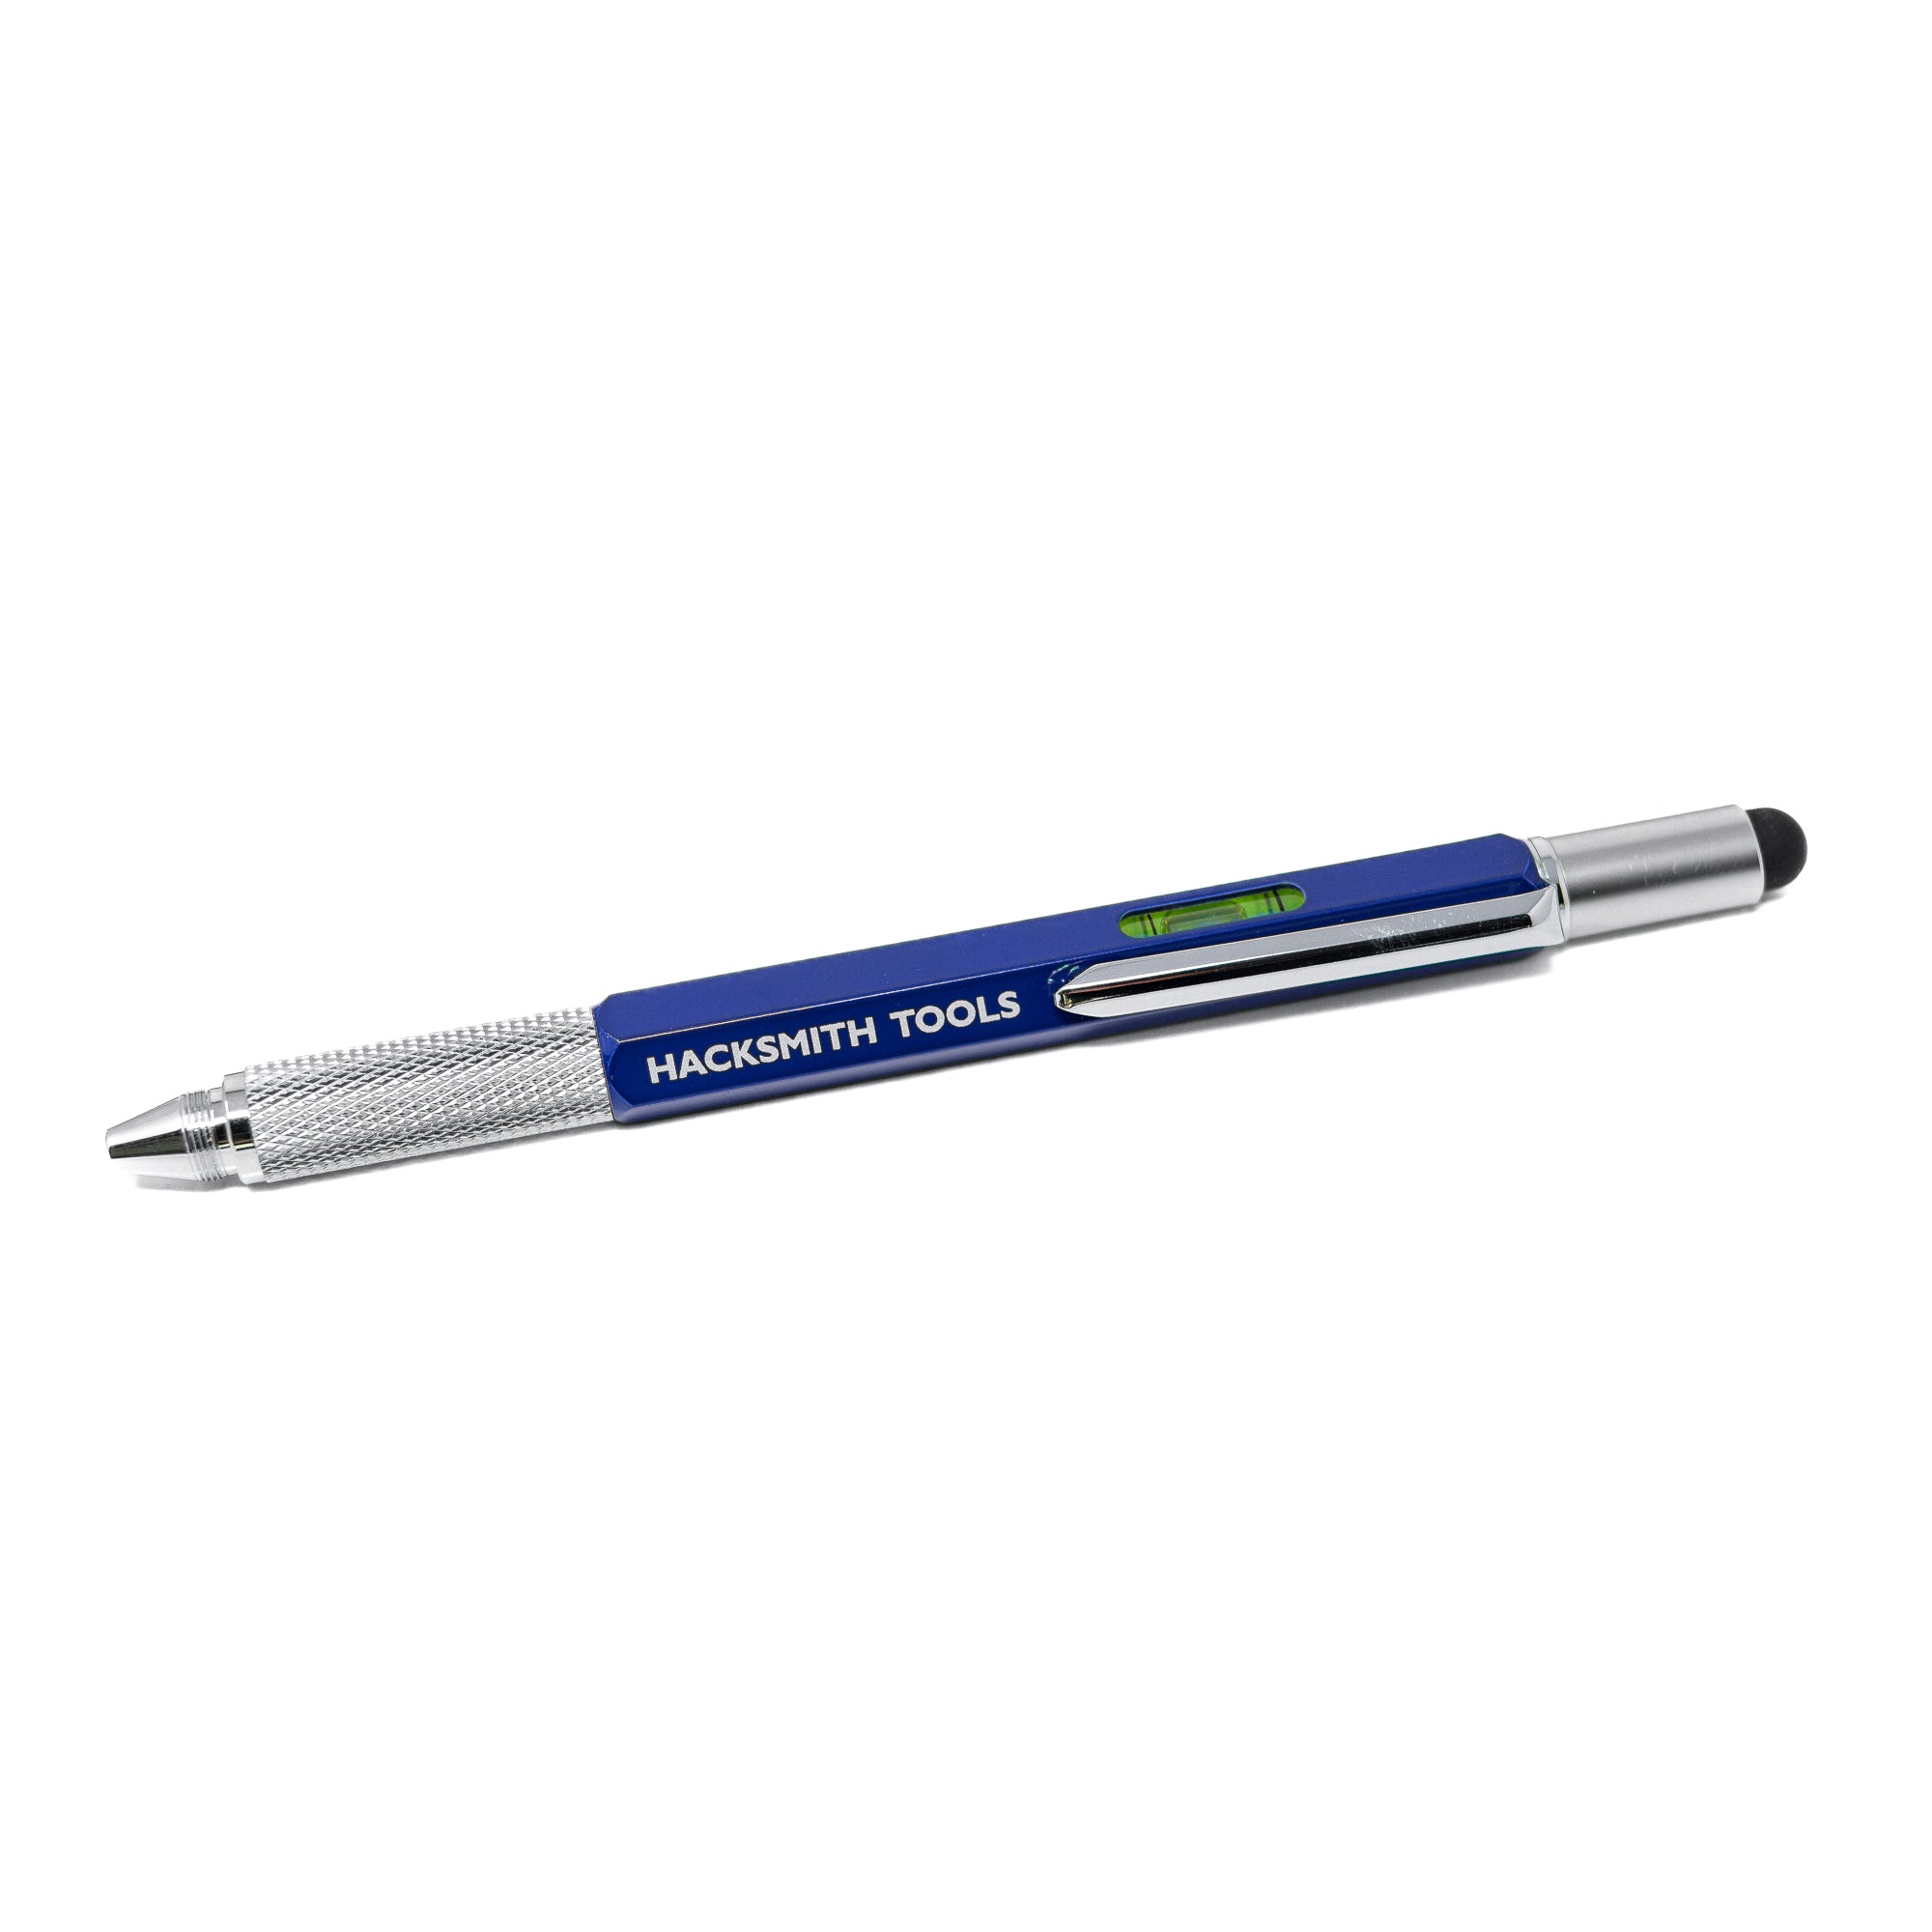 Aluminium 7-in-1 Tool Pen - GEN 2 - Hacksmith.store